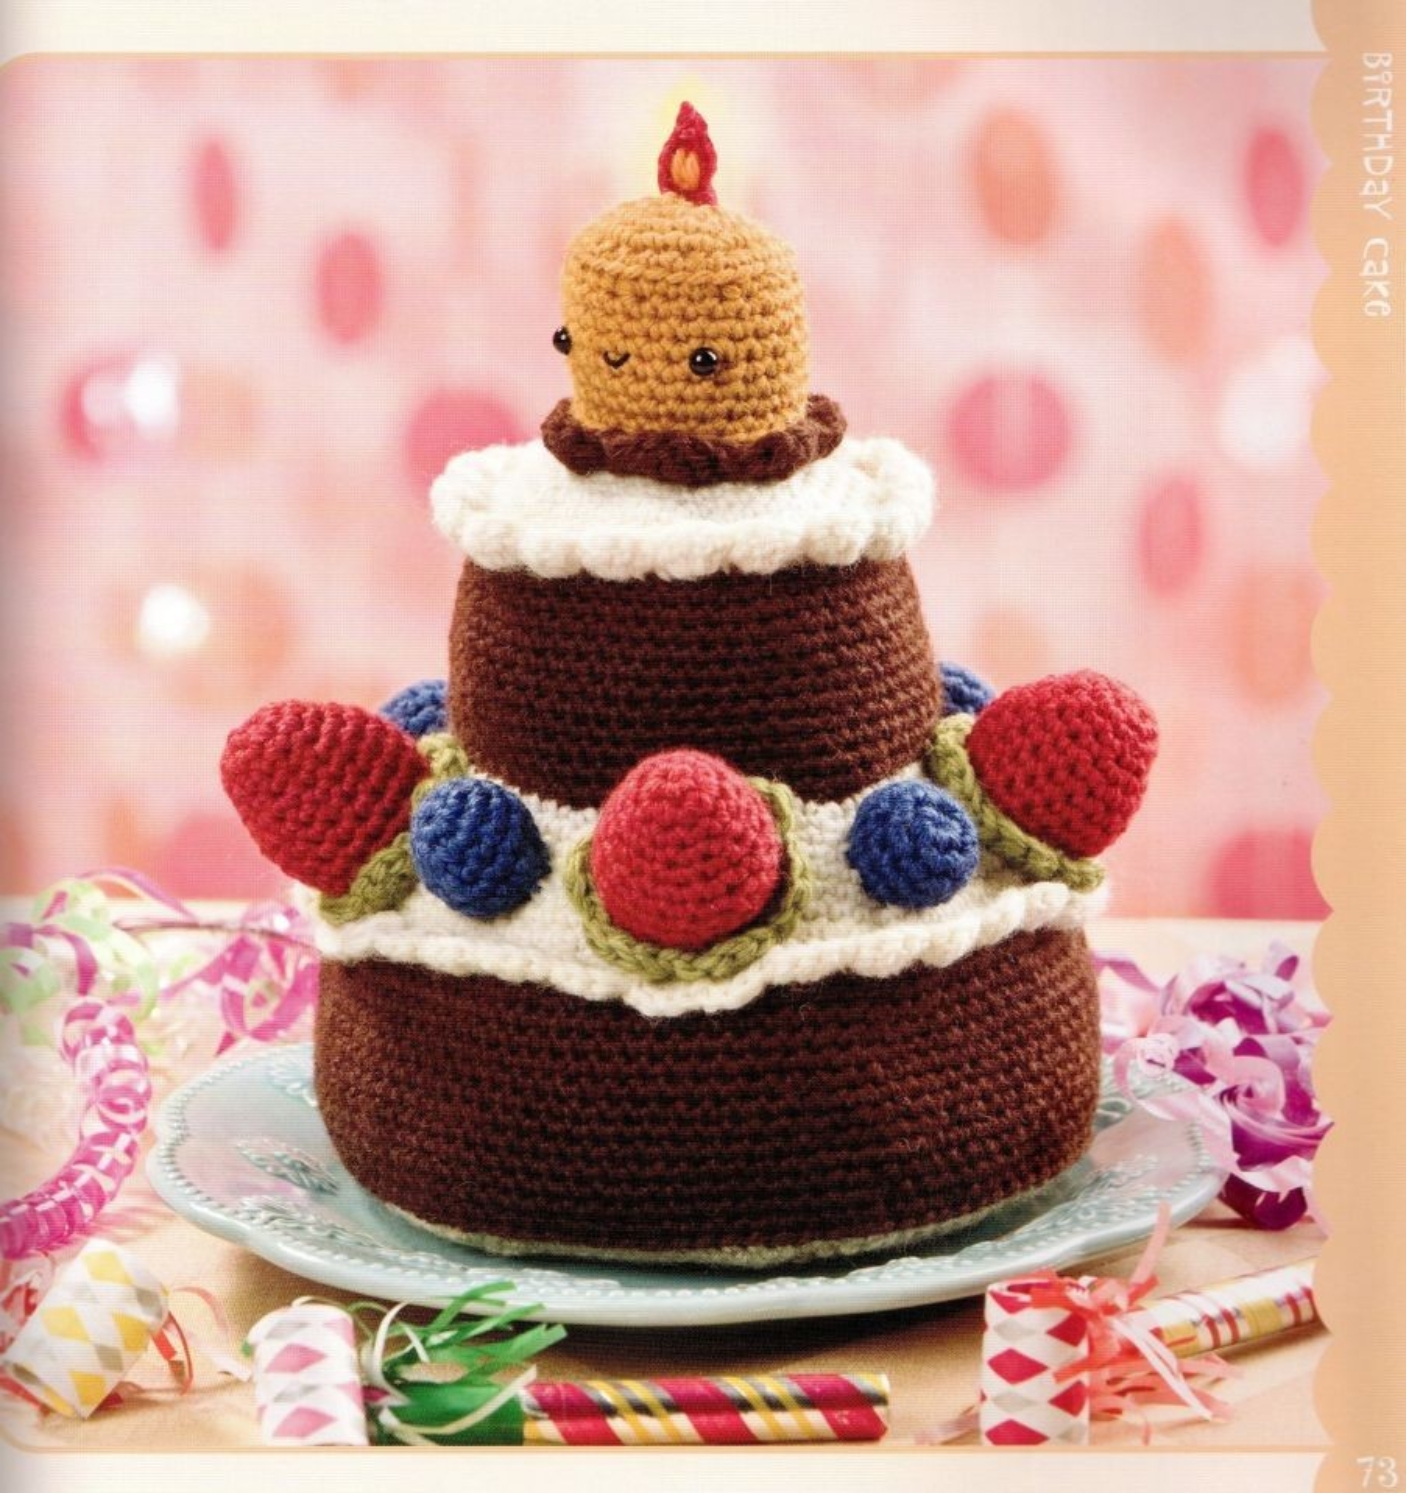 Happy birthday cake amigurumi pattern (3)